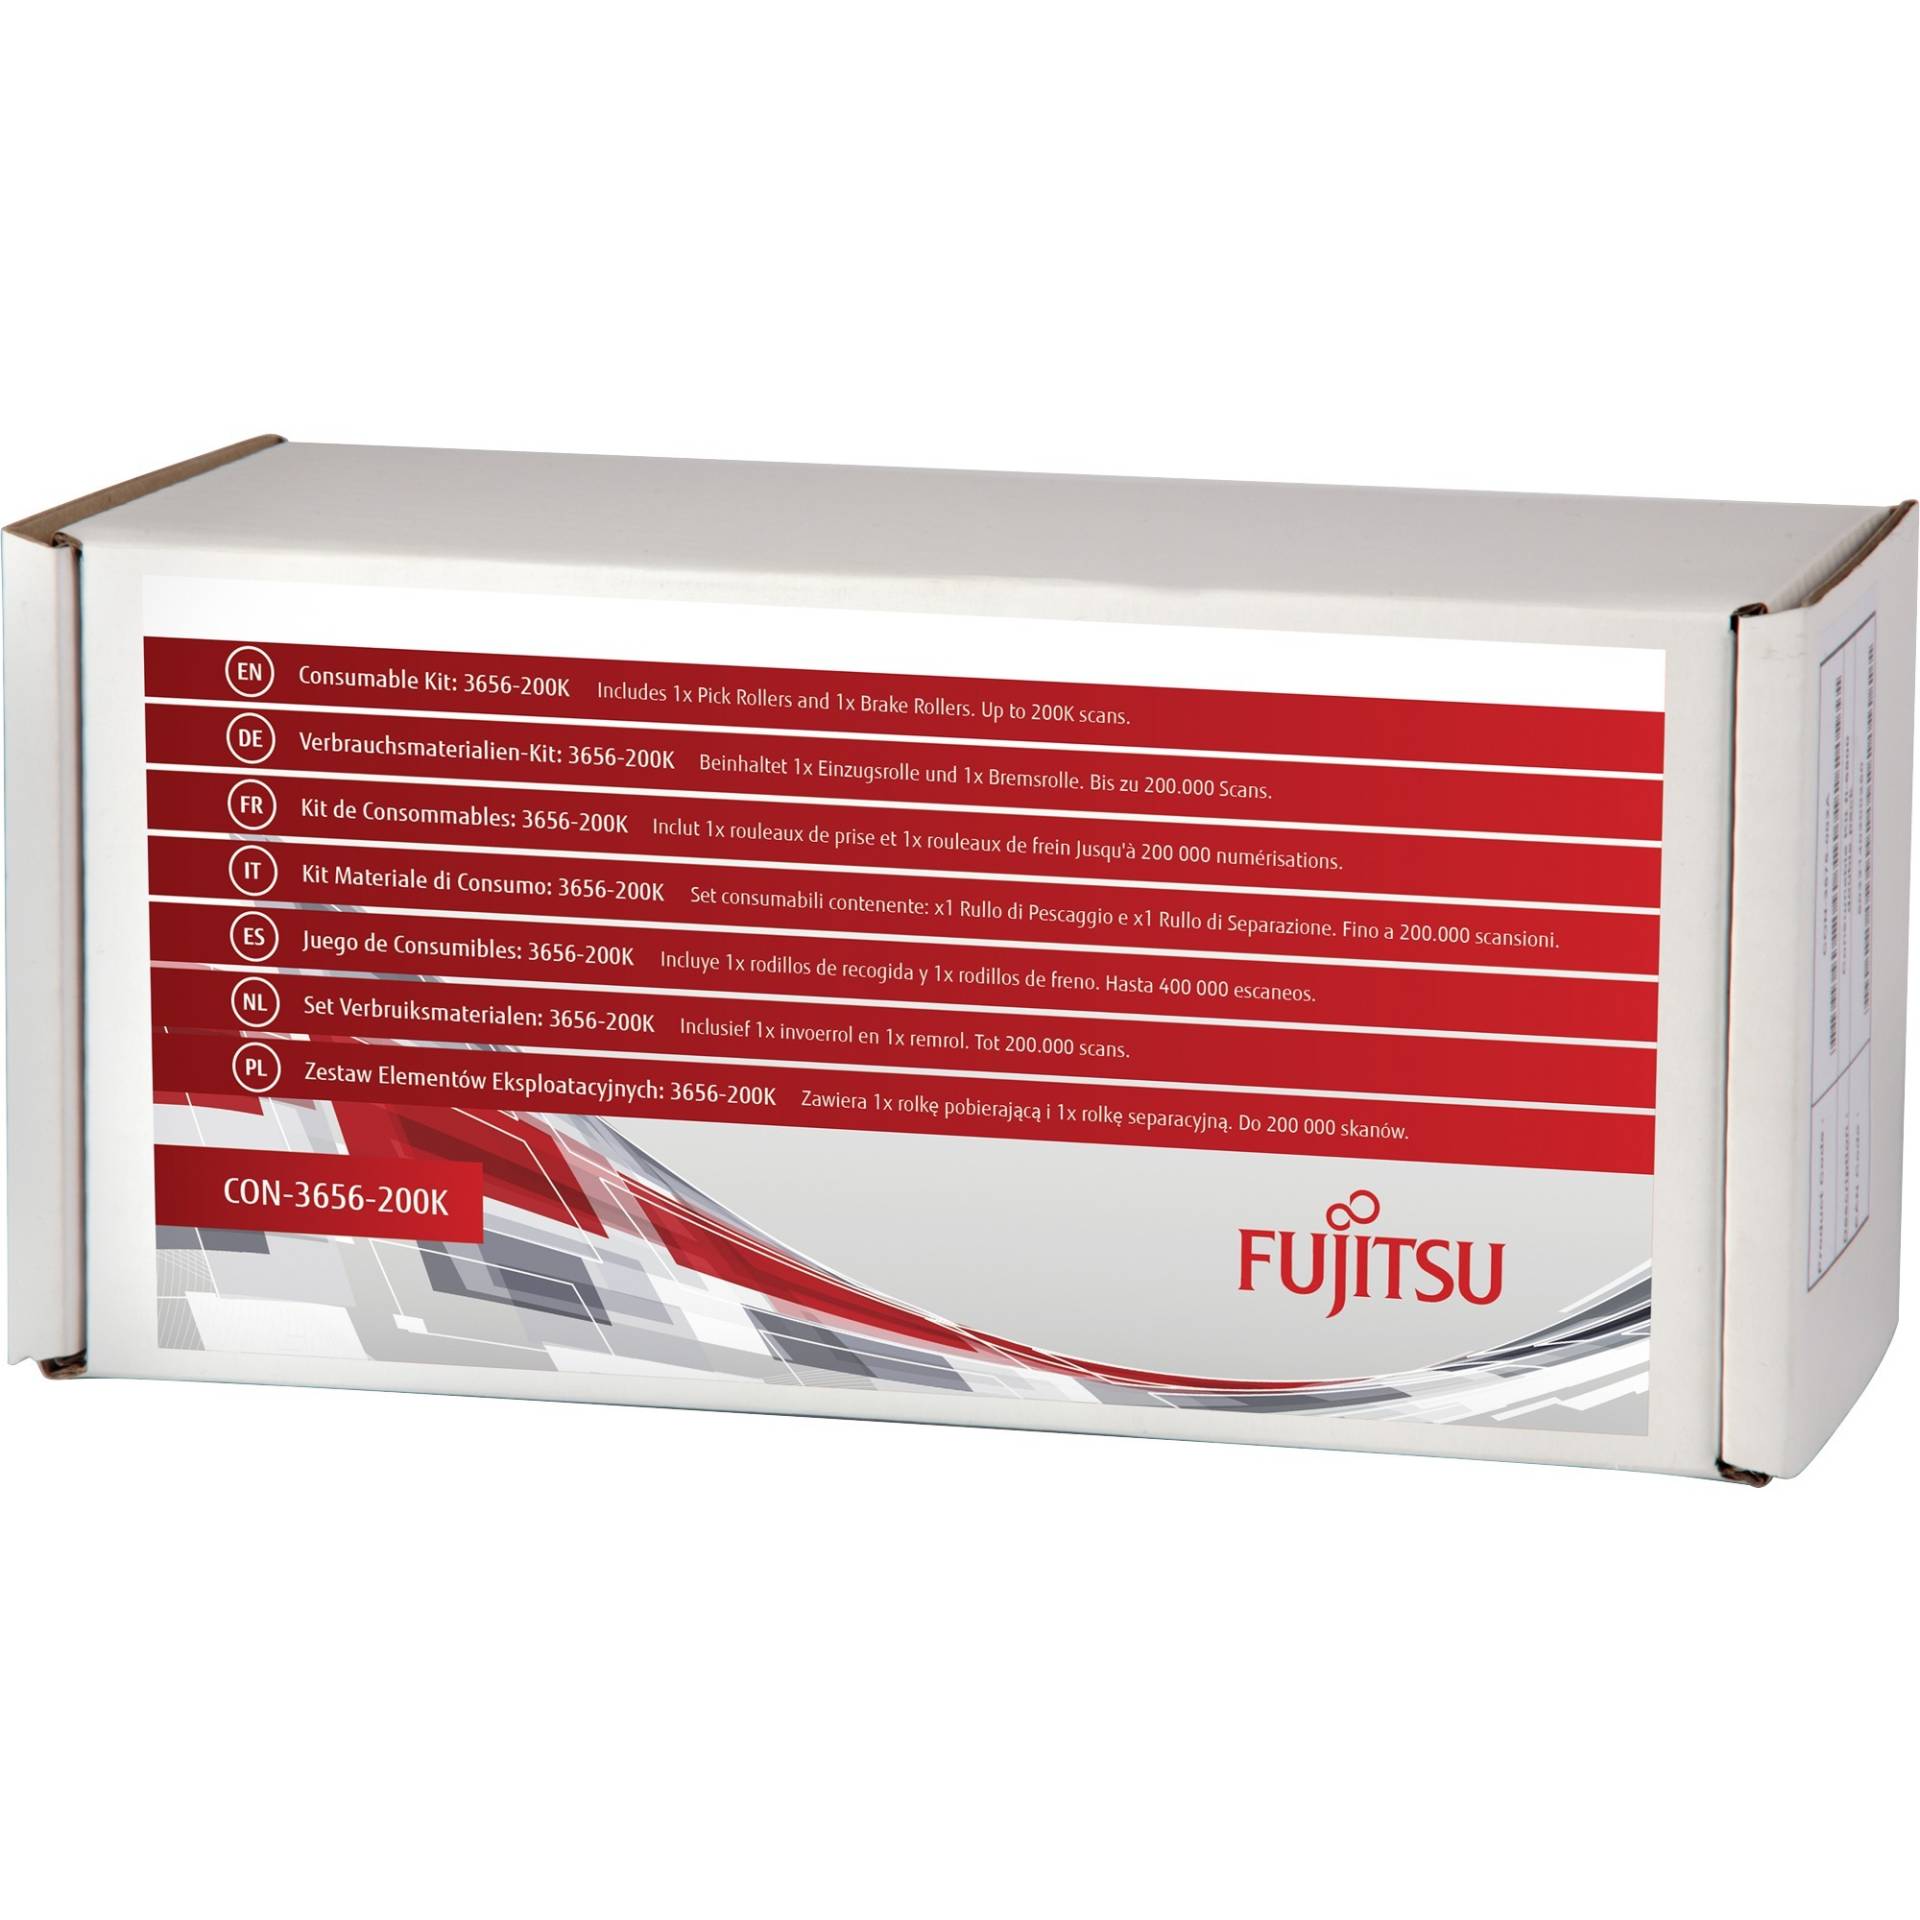 Consumable Kit CON-3656-200K, Wartungseinheit von Fujitsu